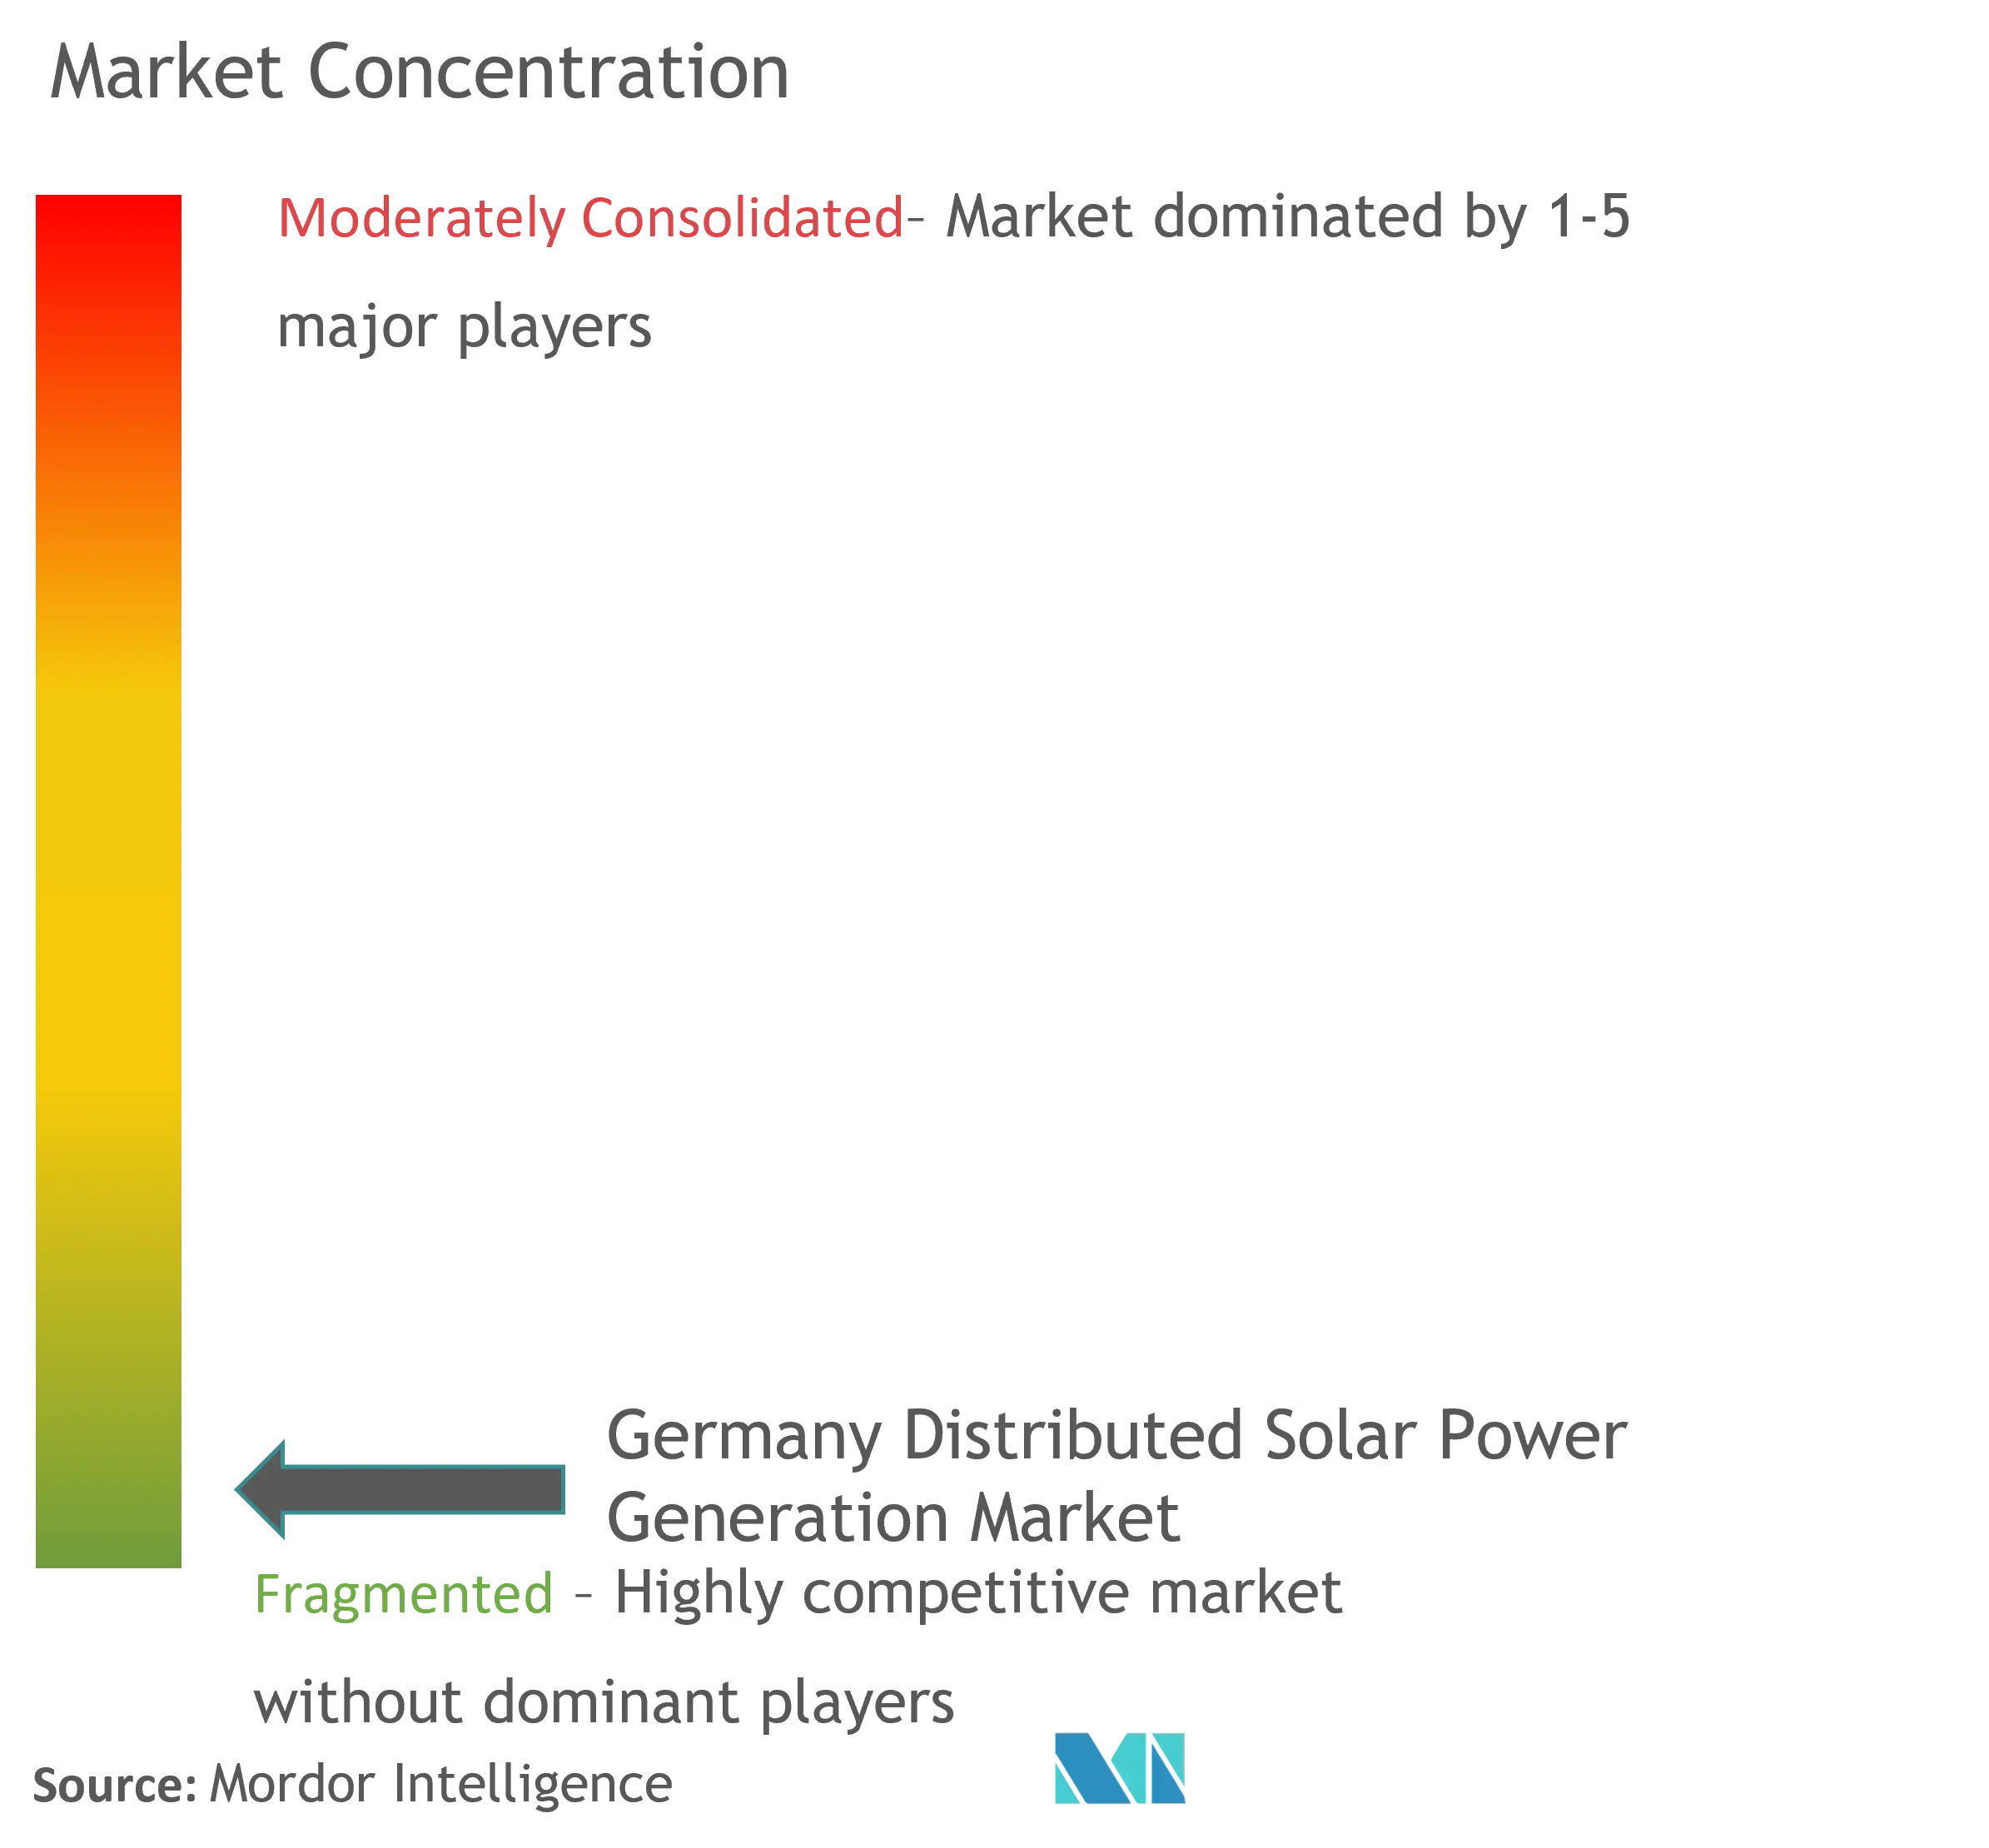 Dezentrale Solarstromerzeugung in DeutschlandMarktkonzentration